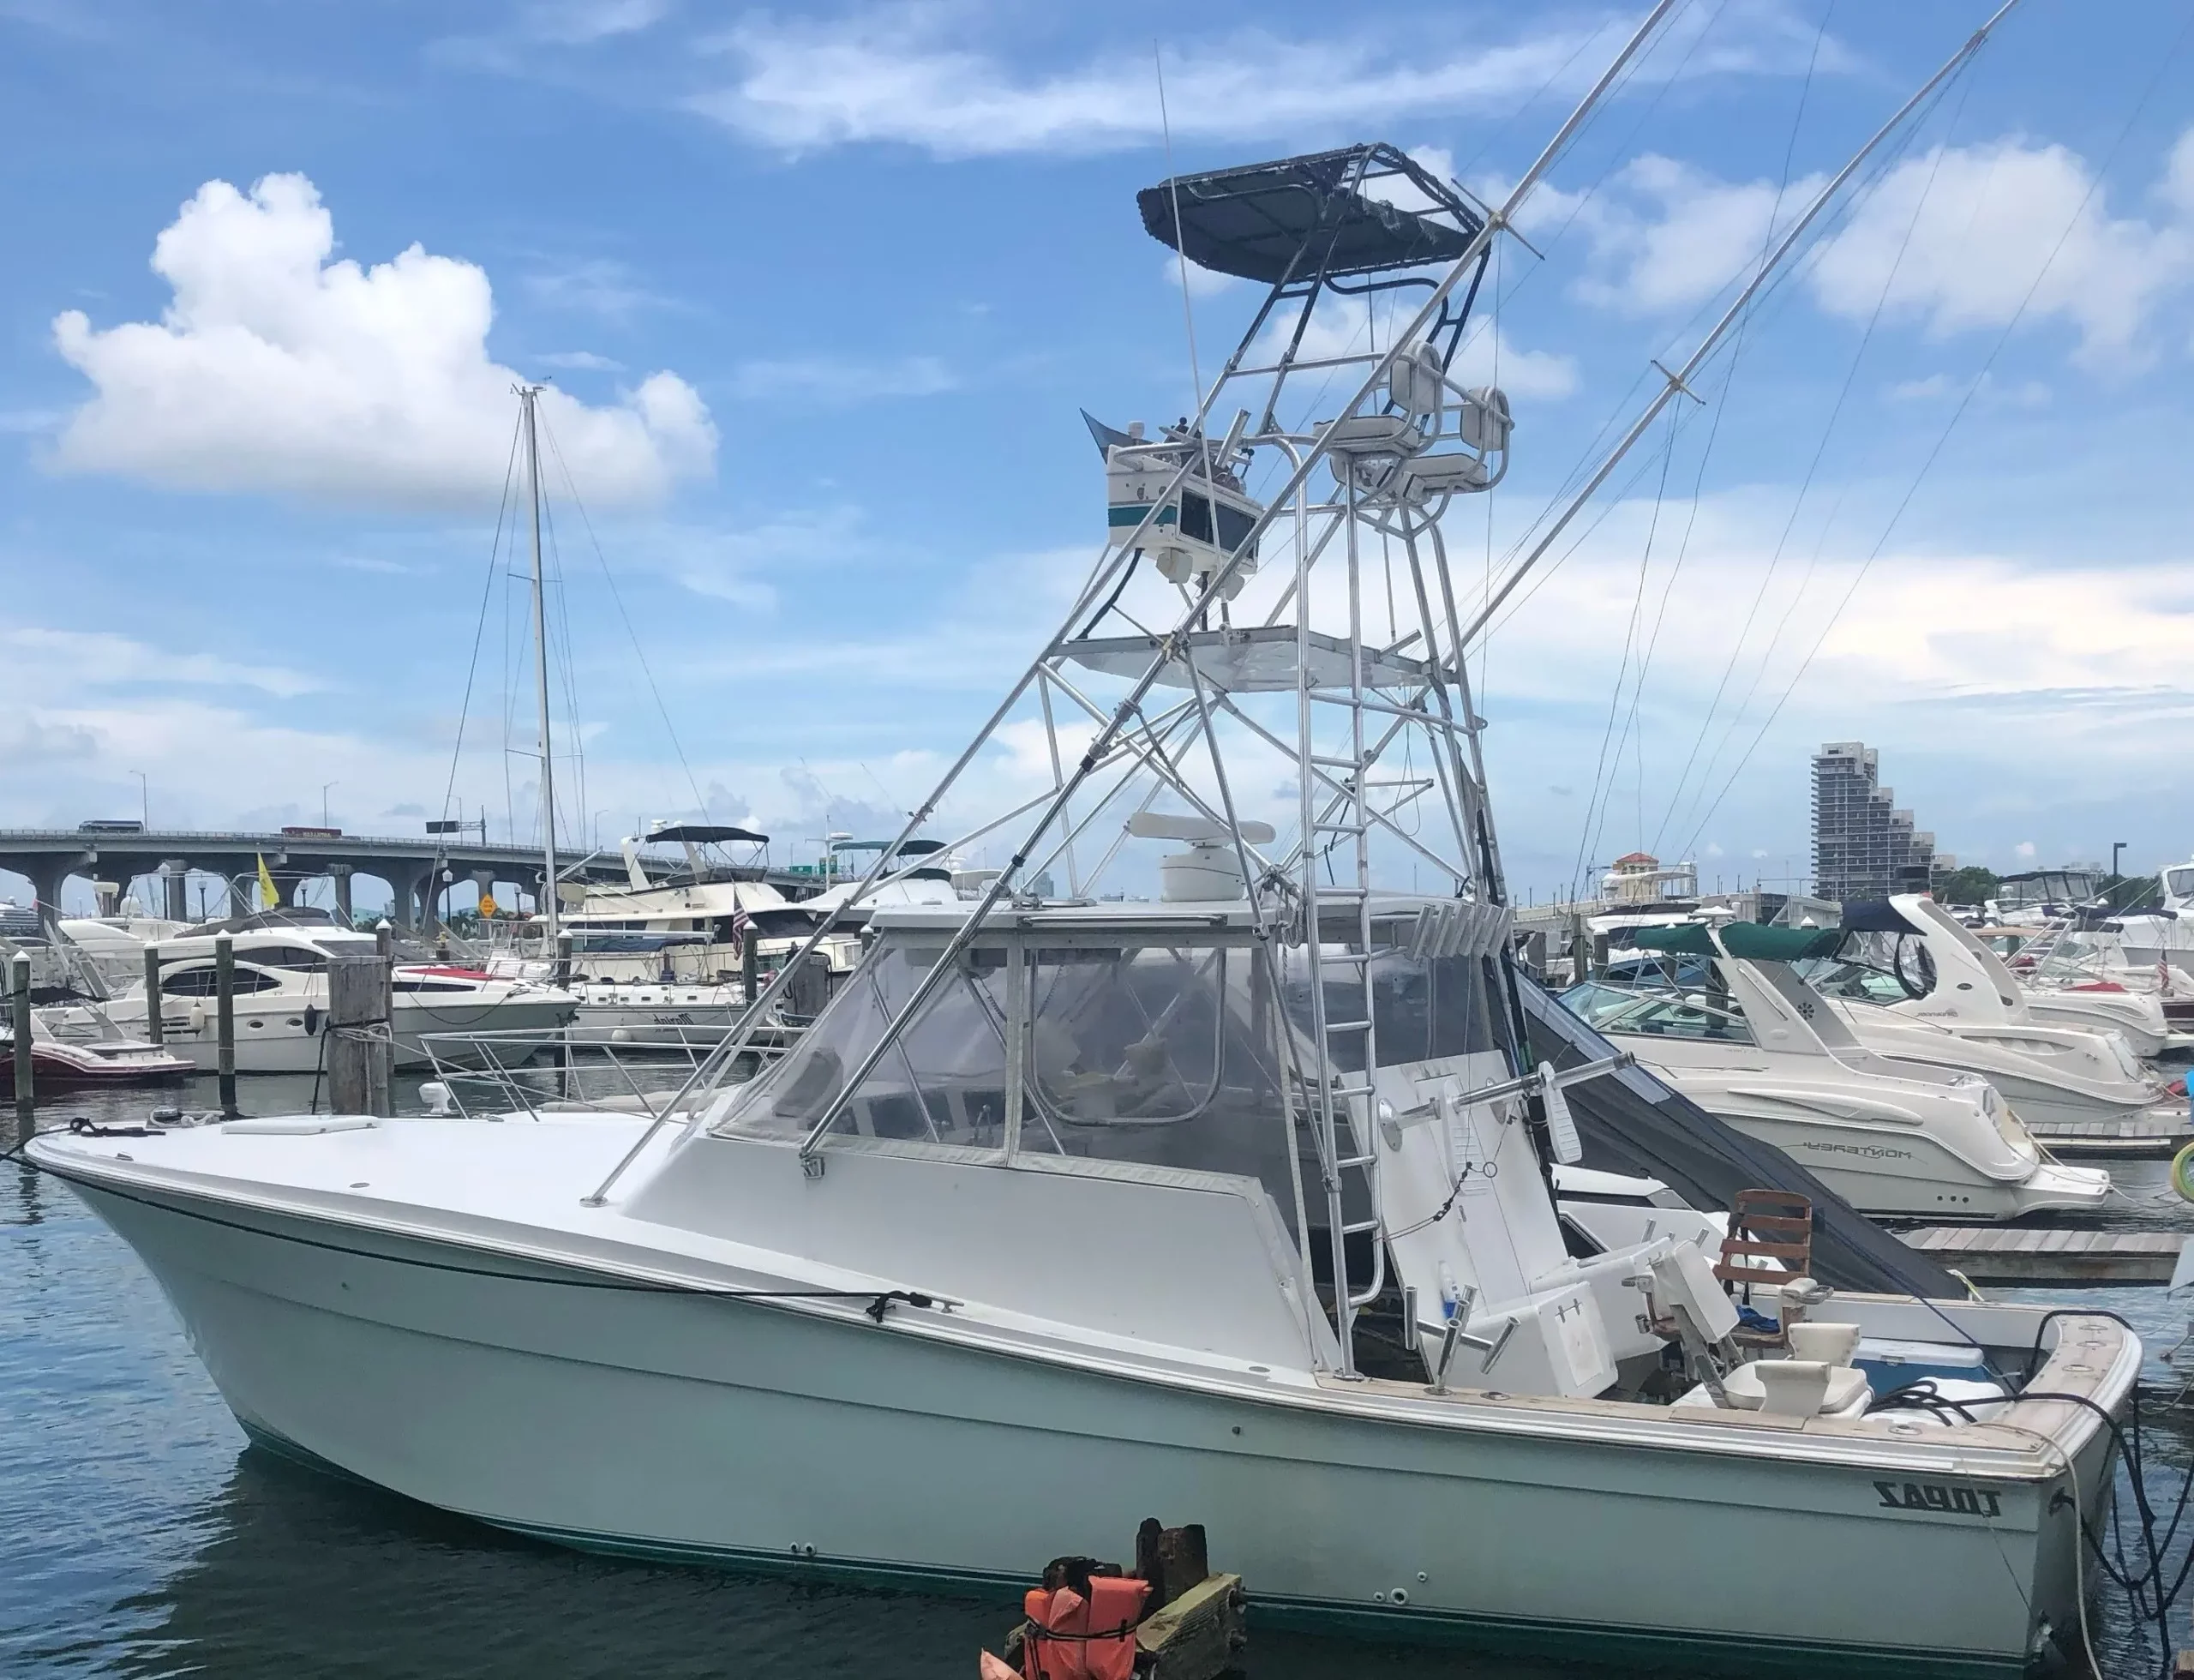 Miami & South Beach's Premier Fishing Charter - The Reward Fleet